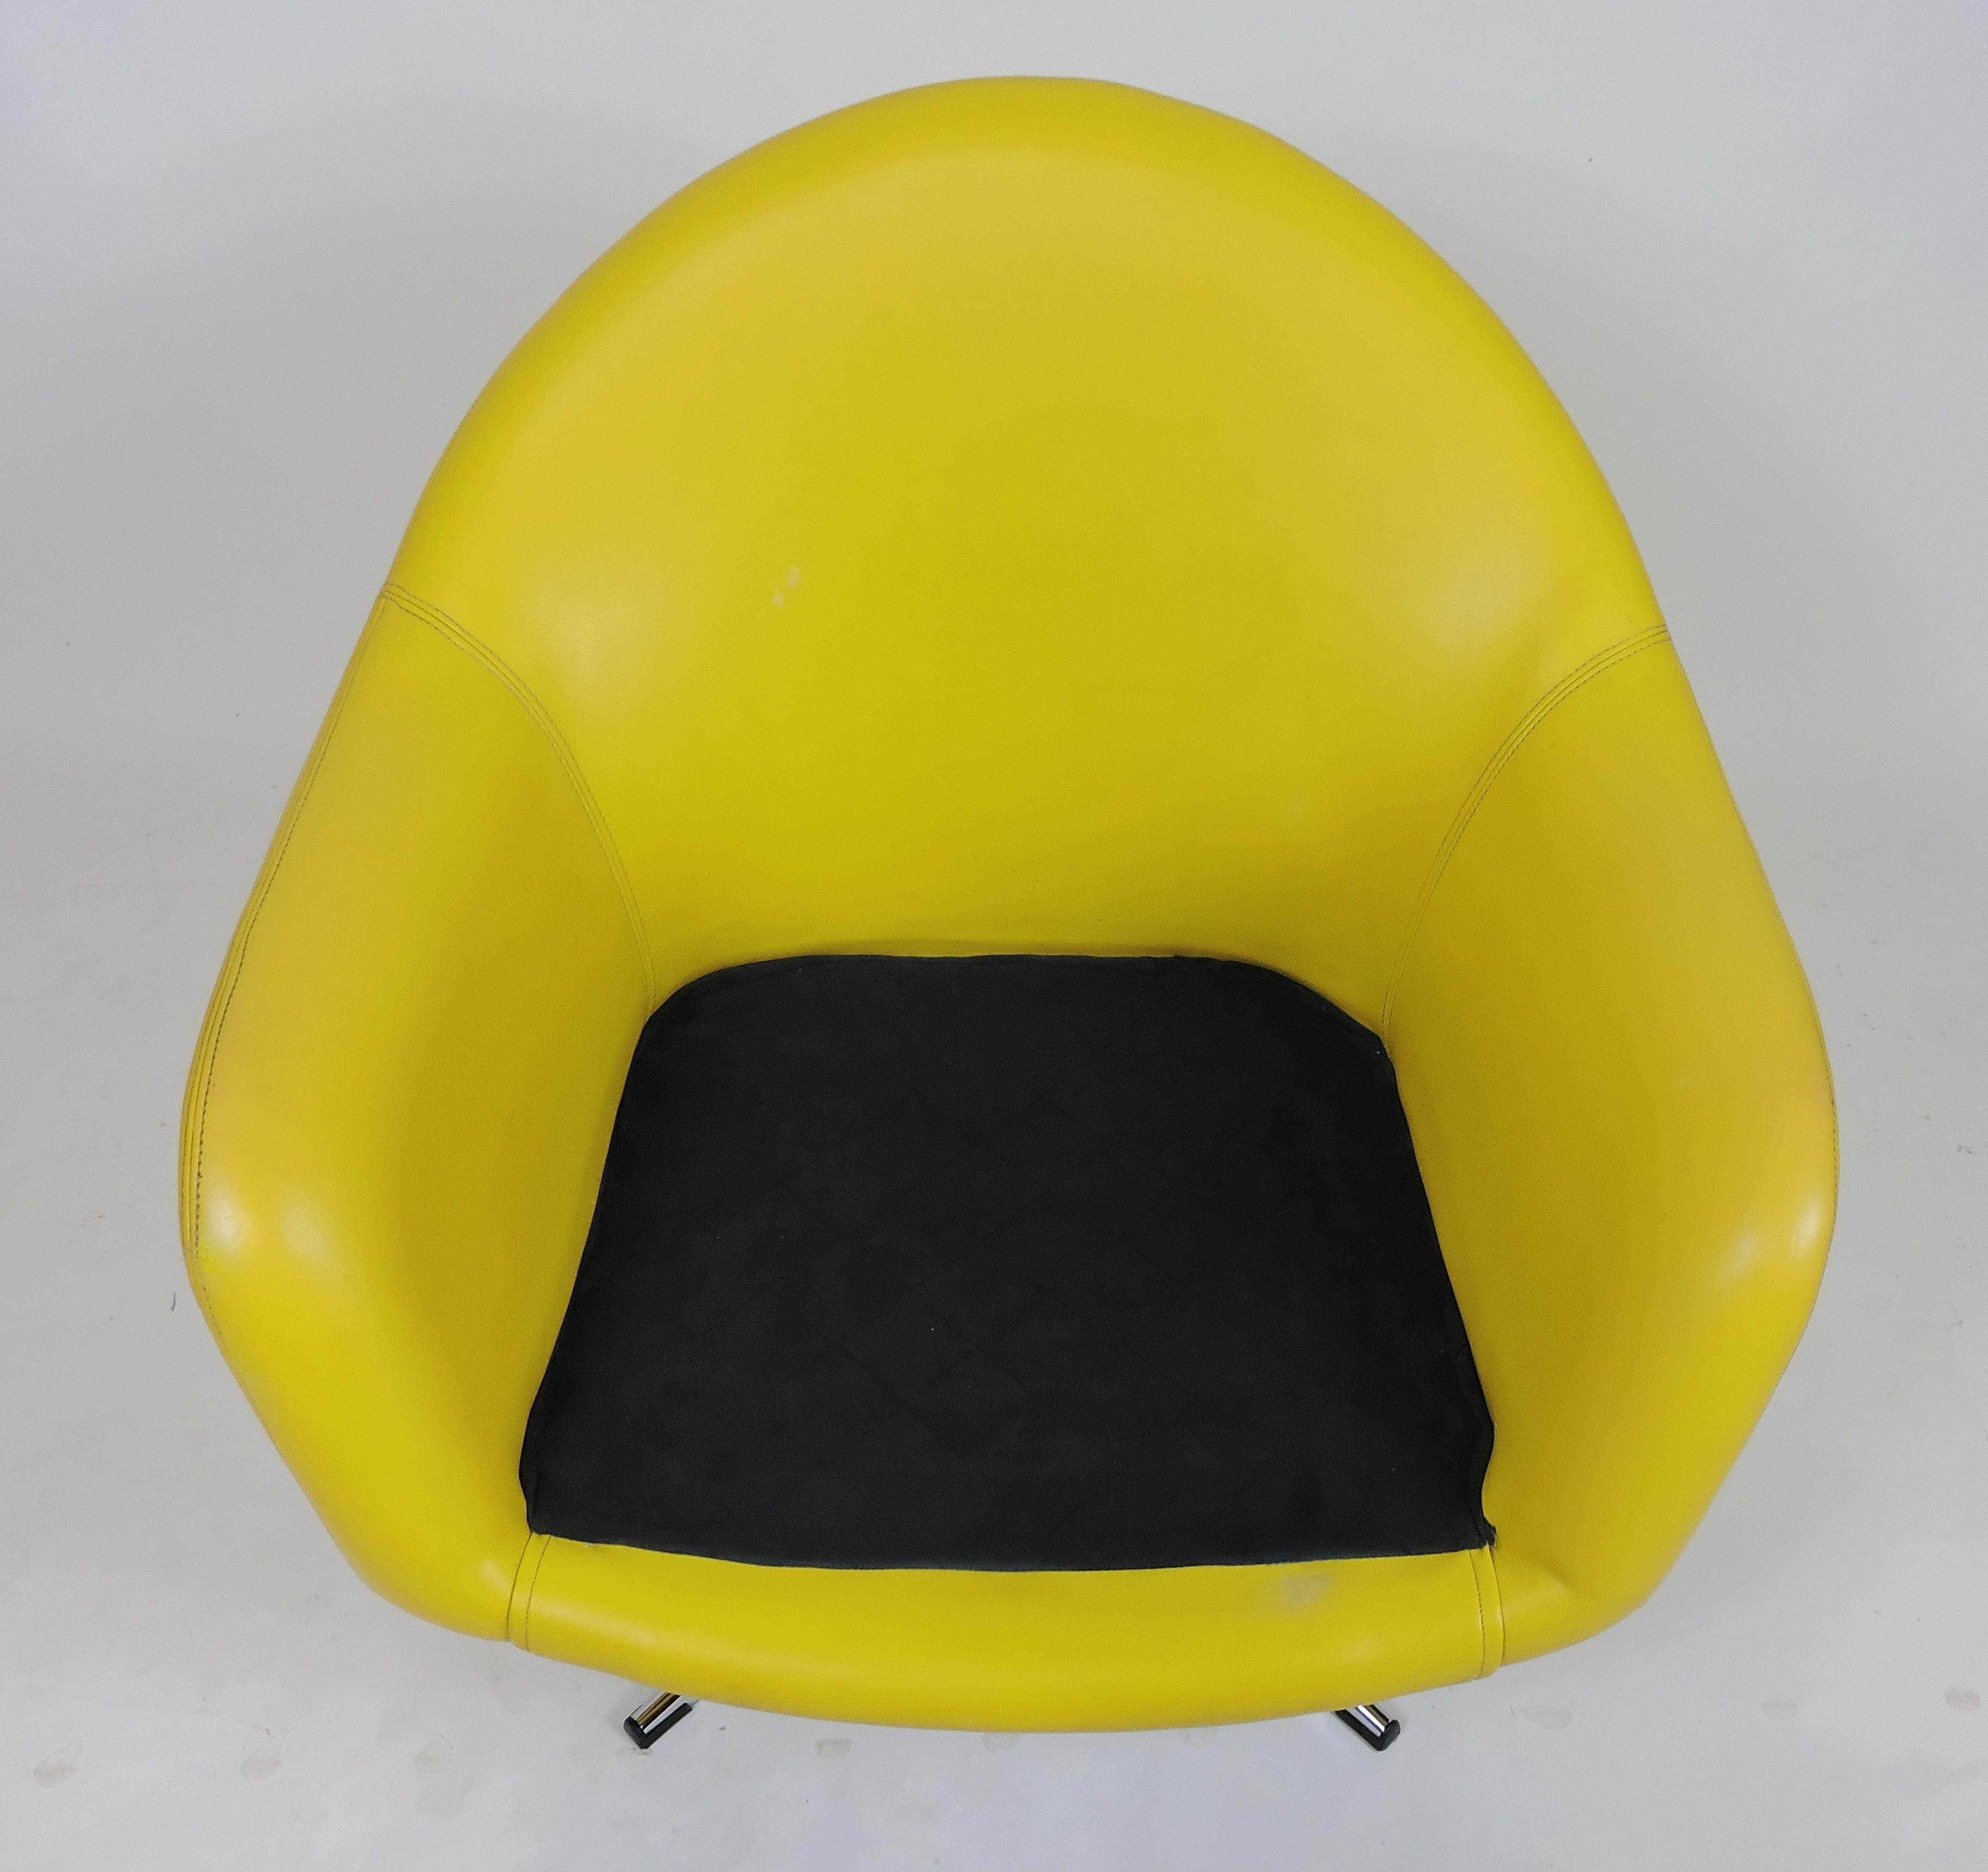 Upholstery Overman Mid-Century Modern Chrome Swivel Pod Chair in Yellow